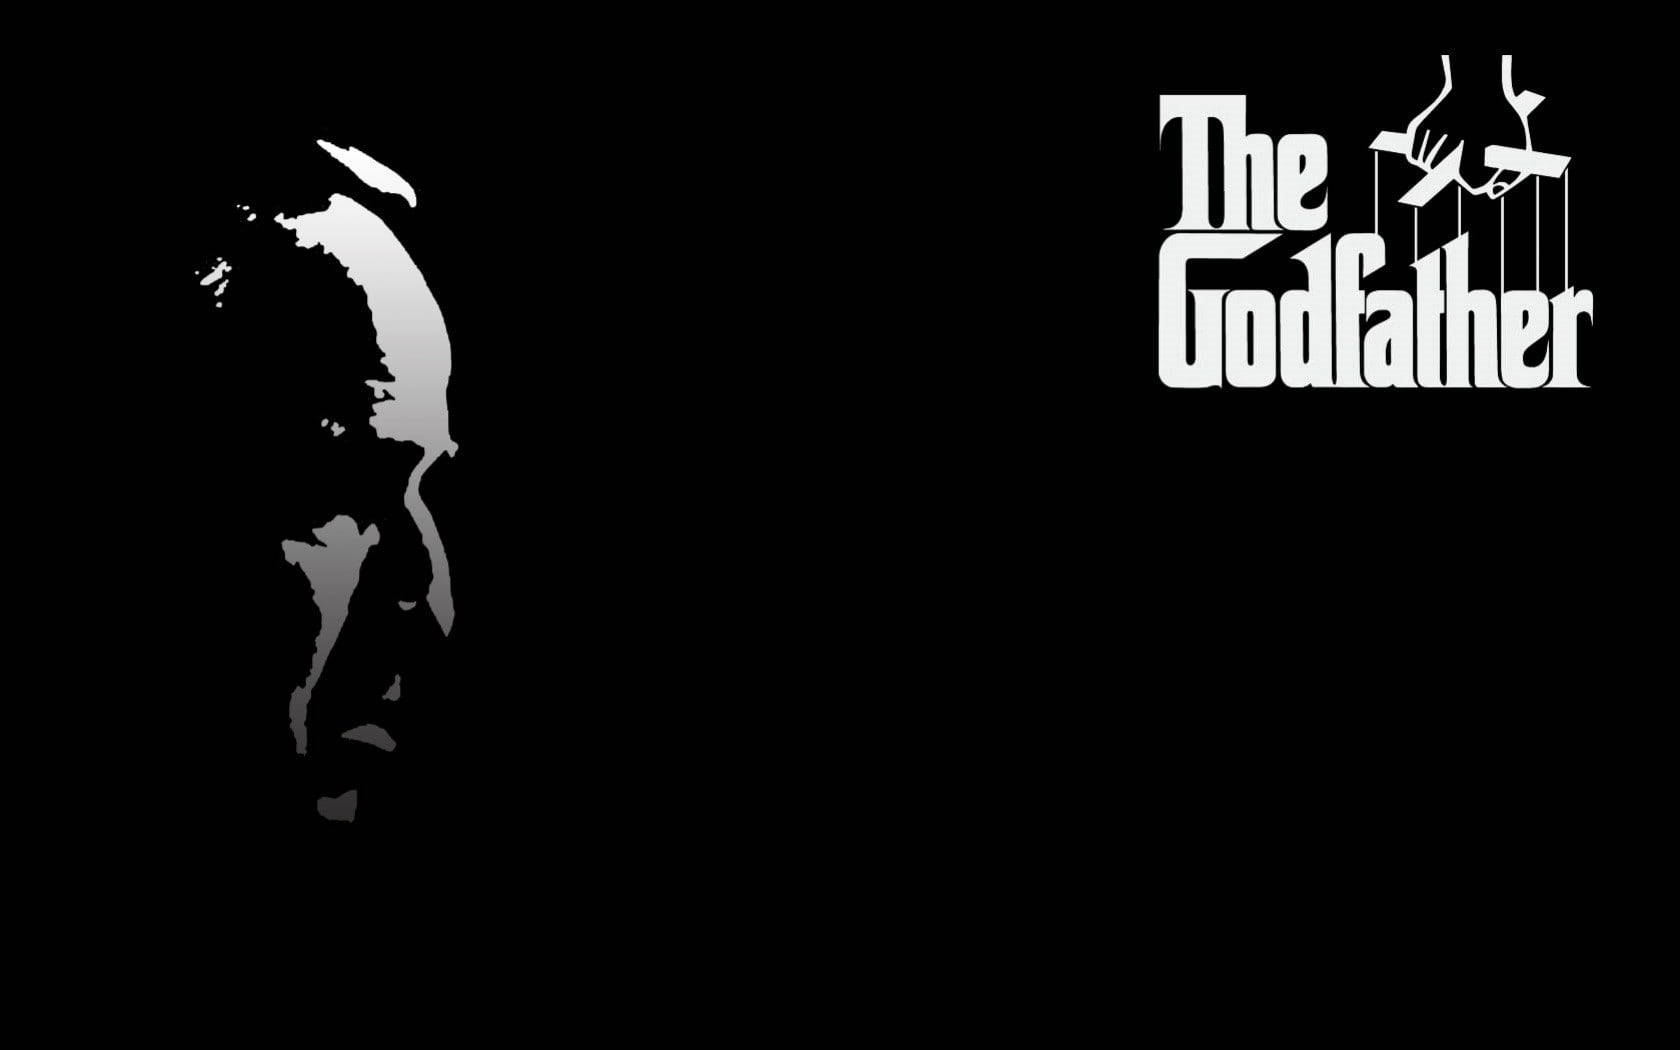 Mafia Film The Godfather Poster Wallpaper